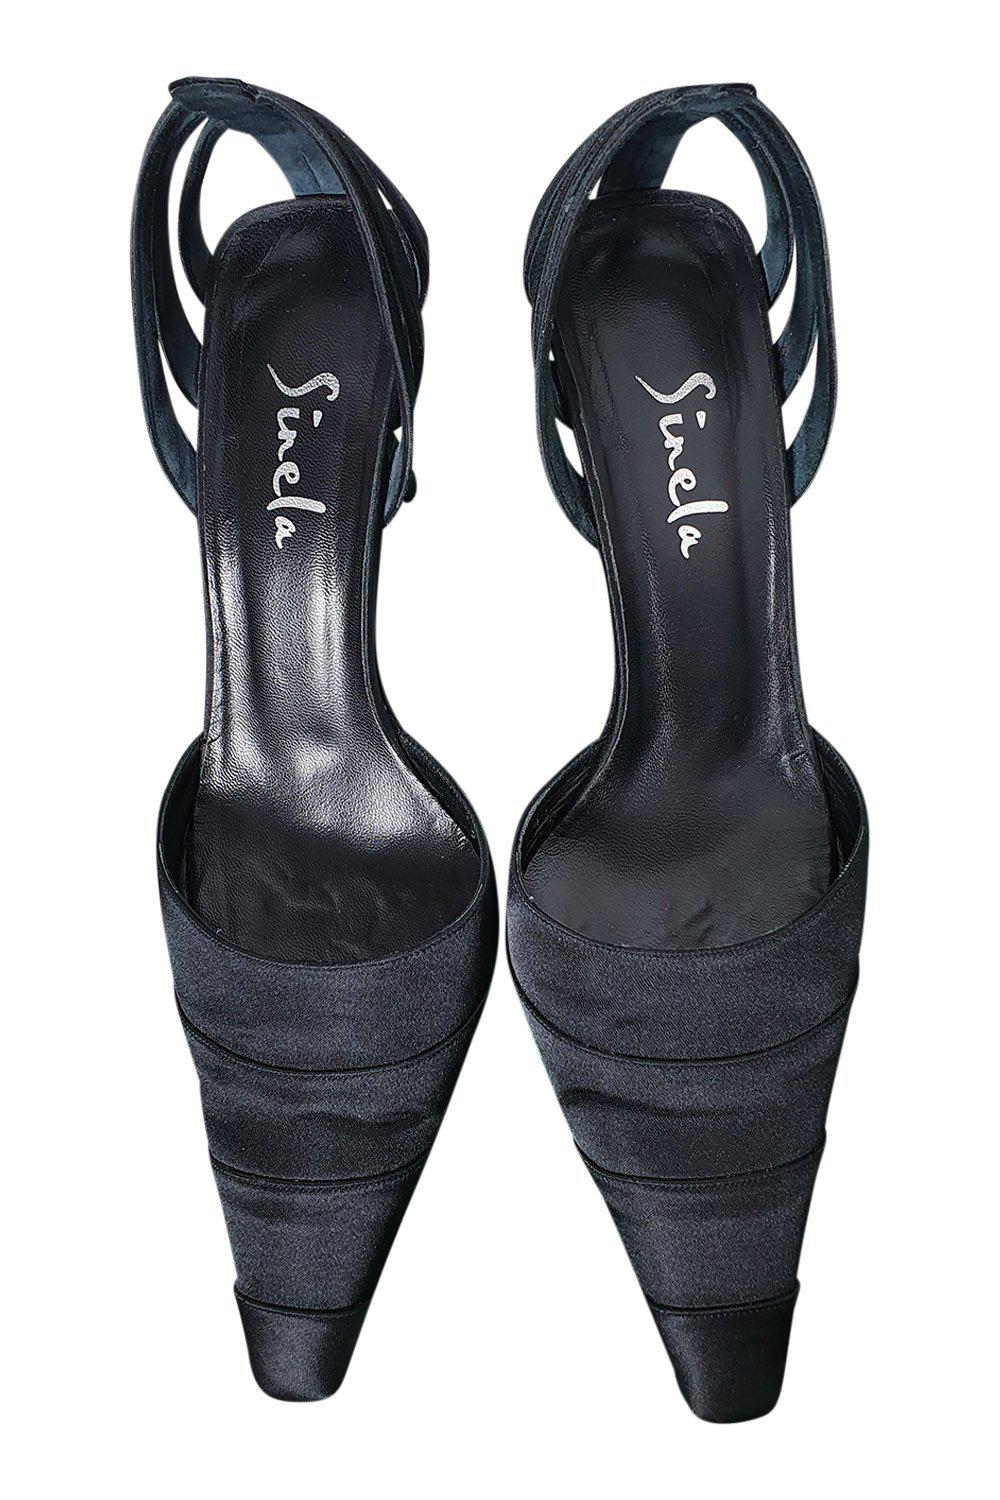 SINELA Black Cut Away Mid Heel Pointy Toe Shoes (EU 40)-Sinela-The Freperie